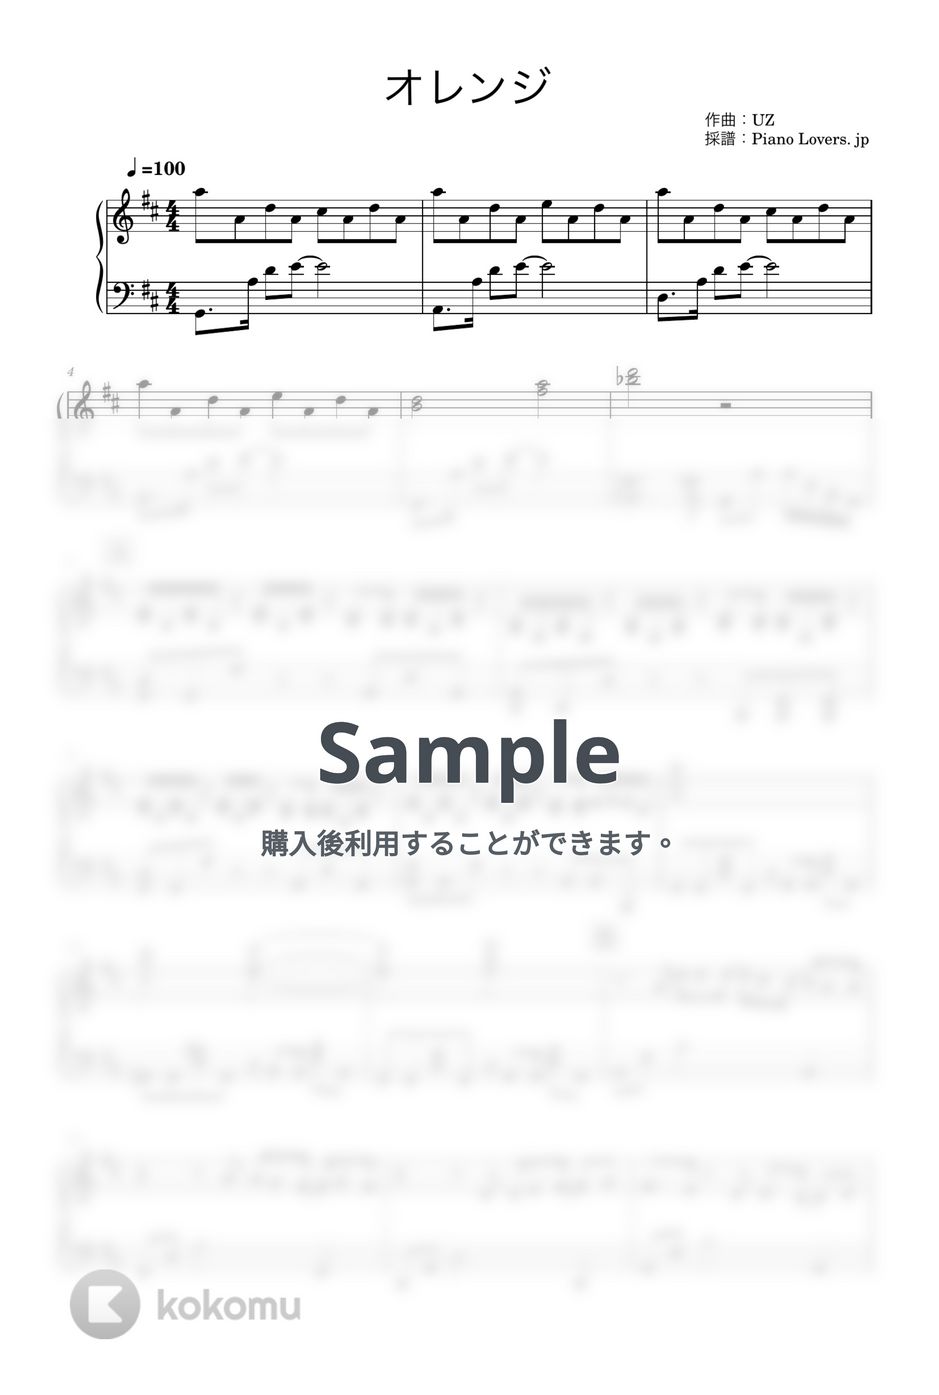 SPYAIR - オレンジ (ハイキュー!!) by Piano. Lovers. jp